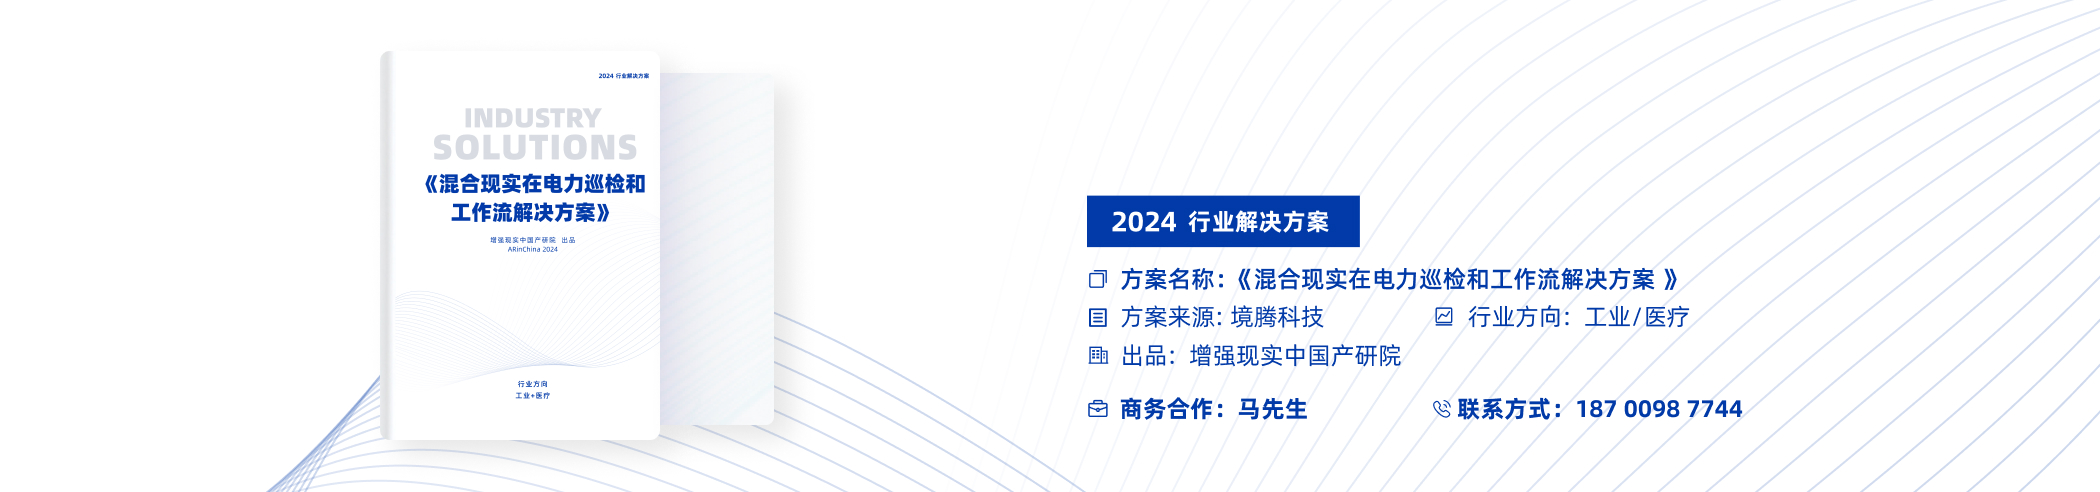 ARinChina2023元宇宙年度荣誉榜——创新应用榜单